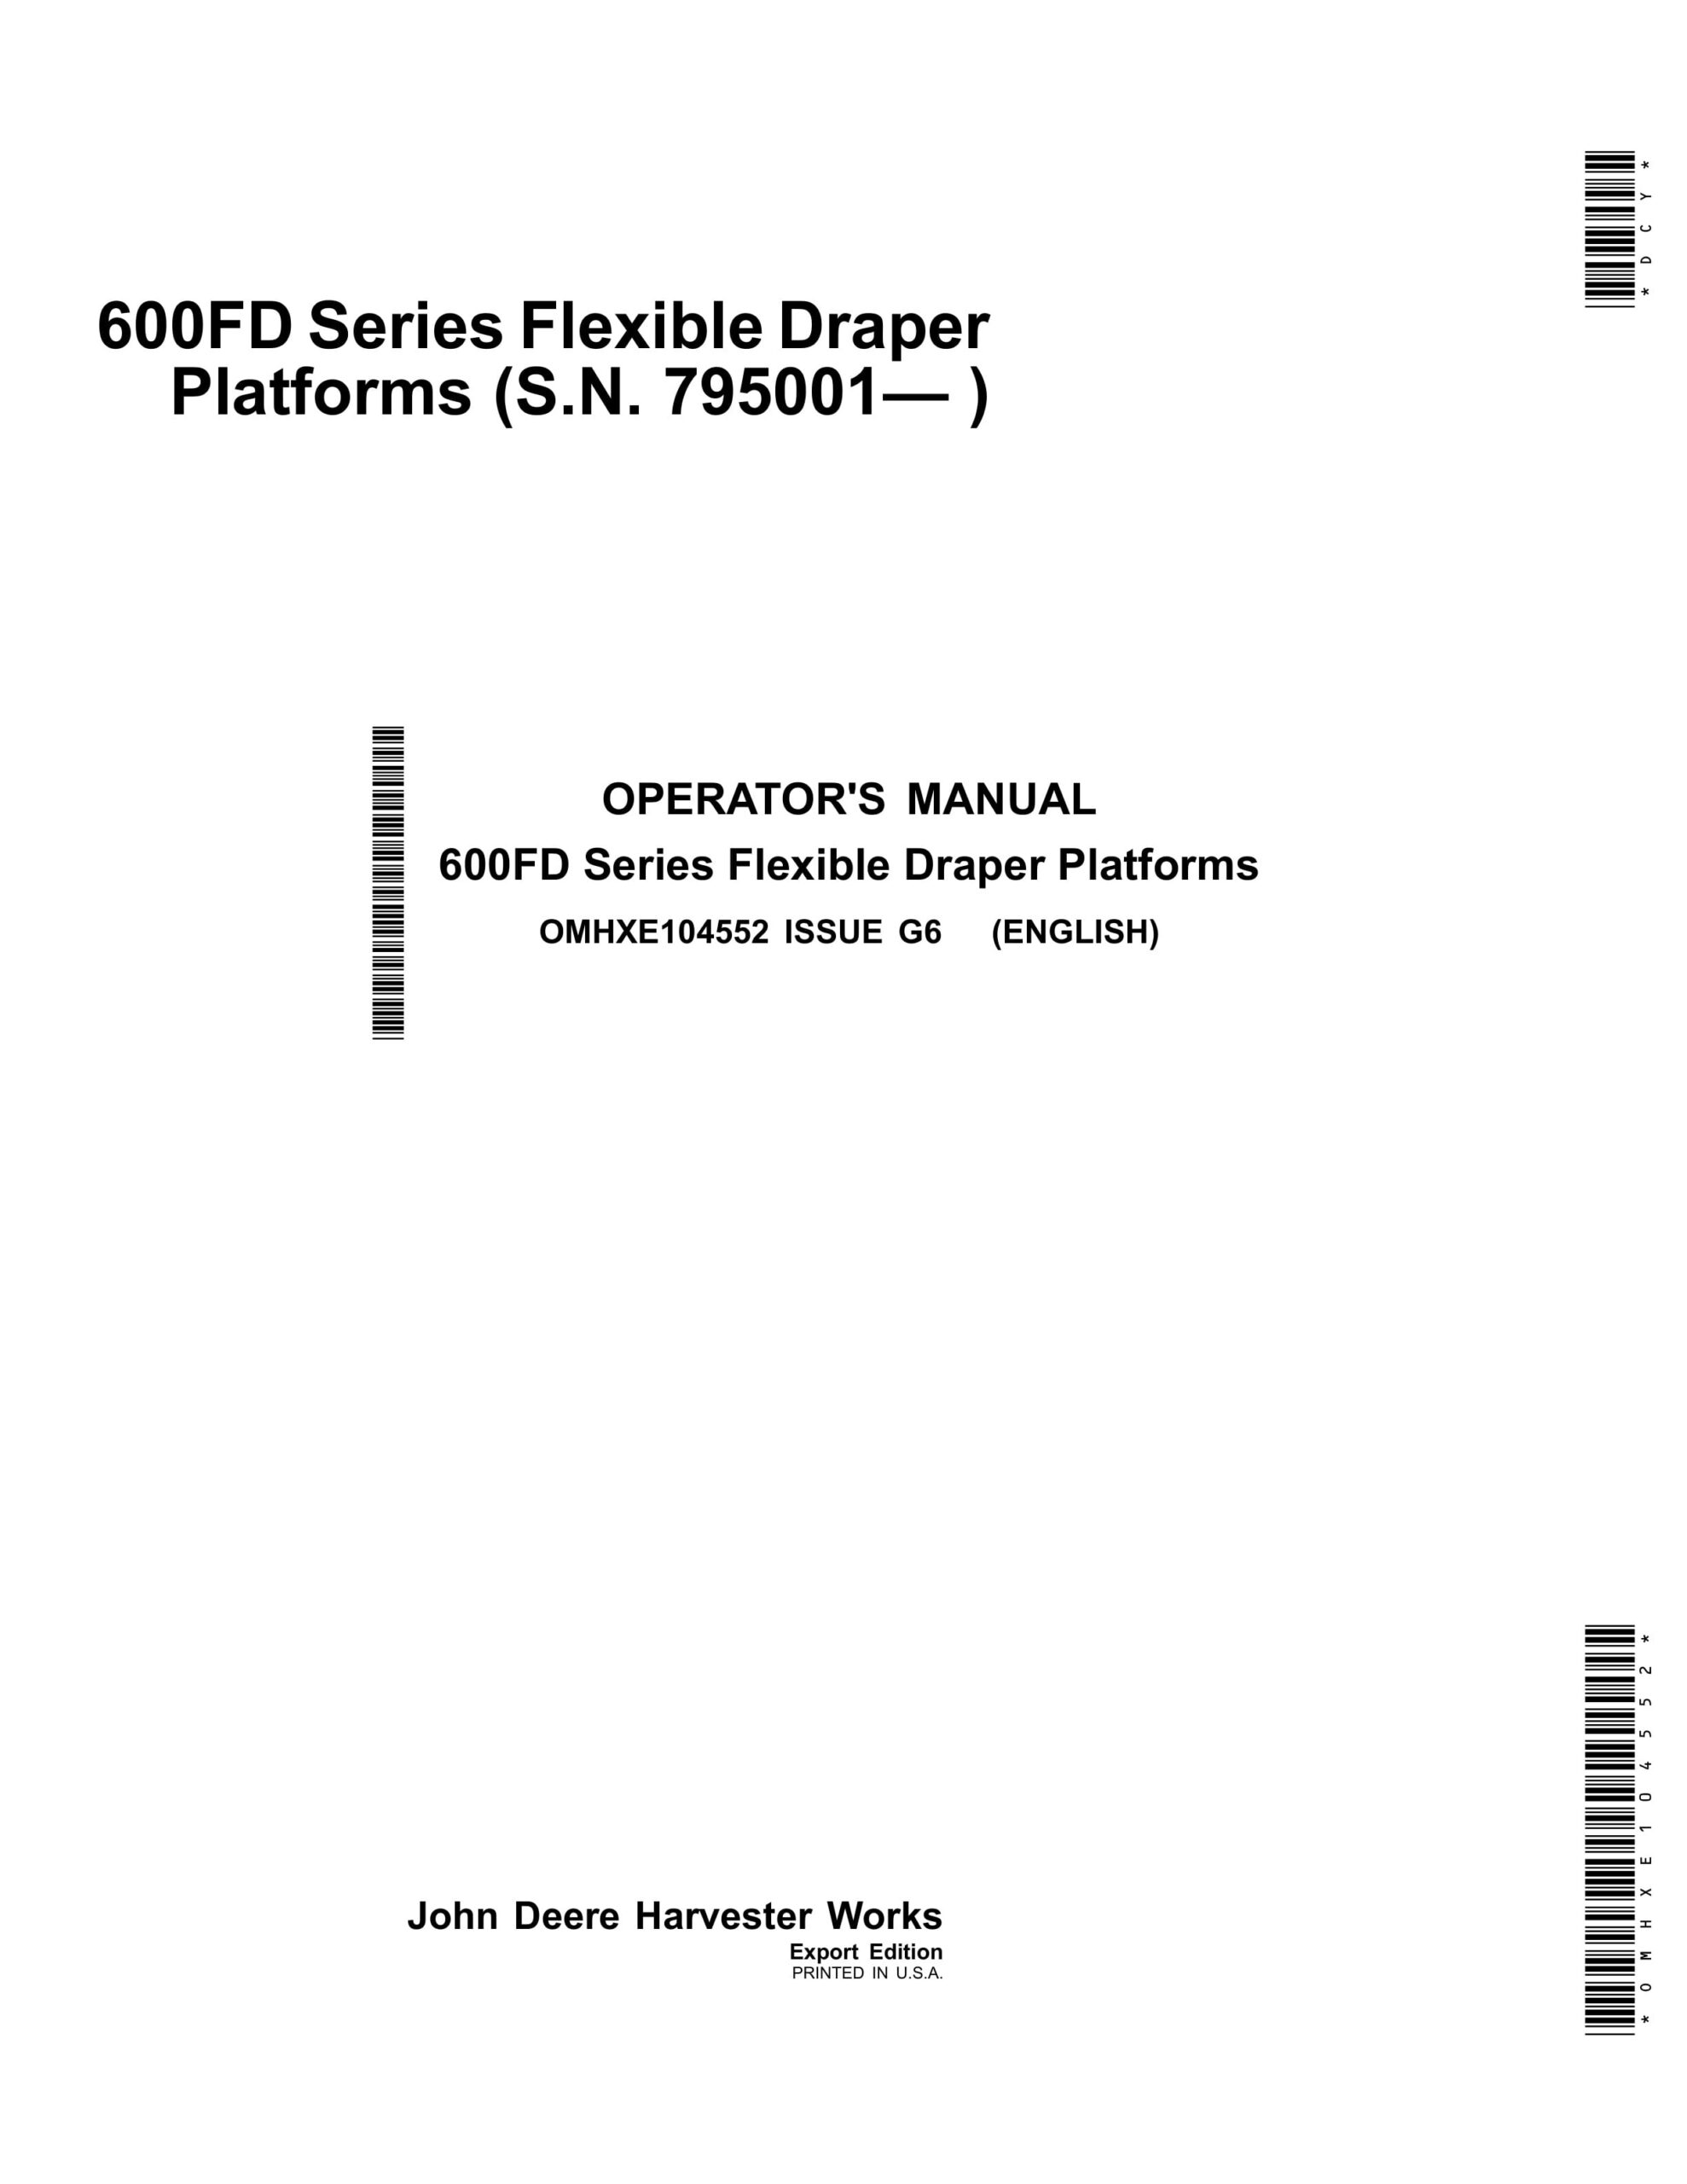 John Deere 600FD Series Flexible Draper Platform Operator Manual OMHXE104552-1